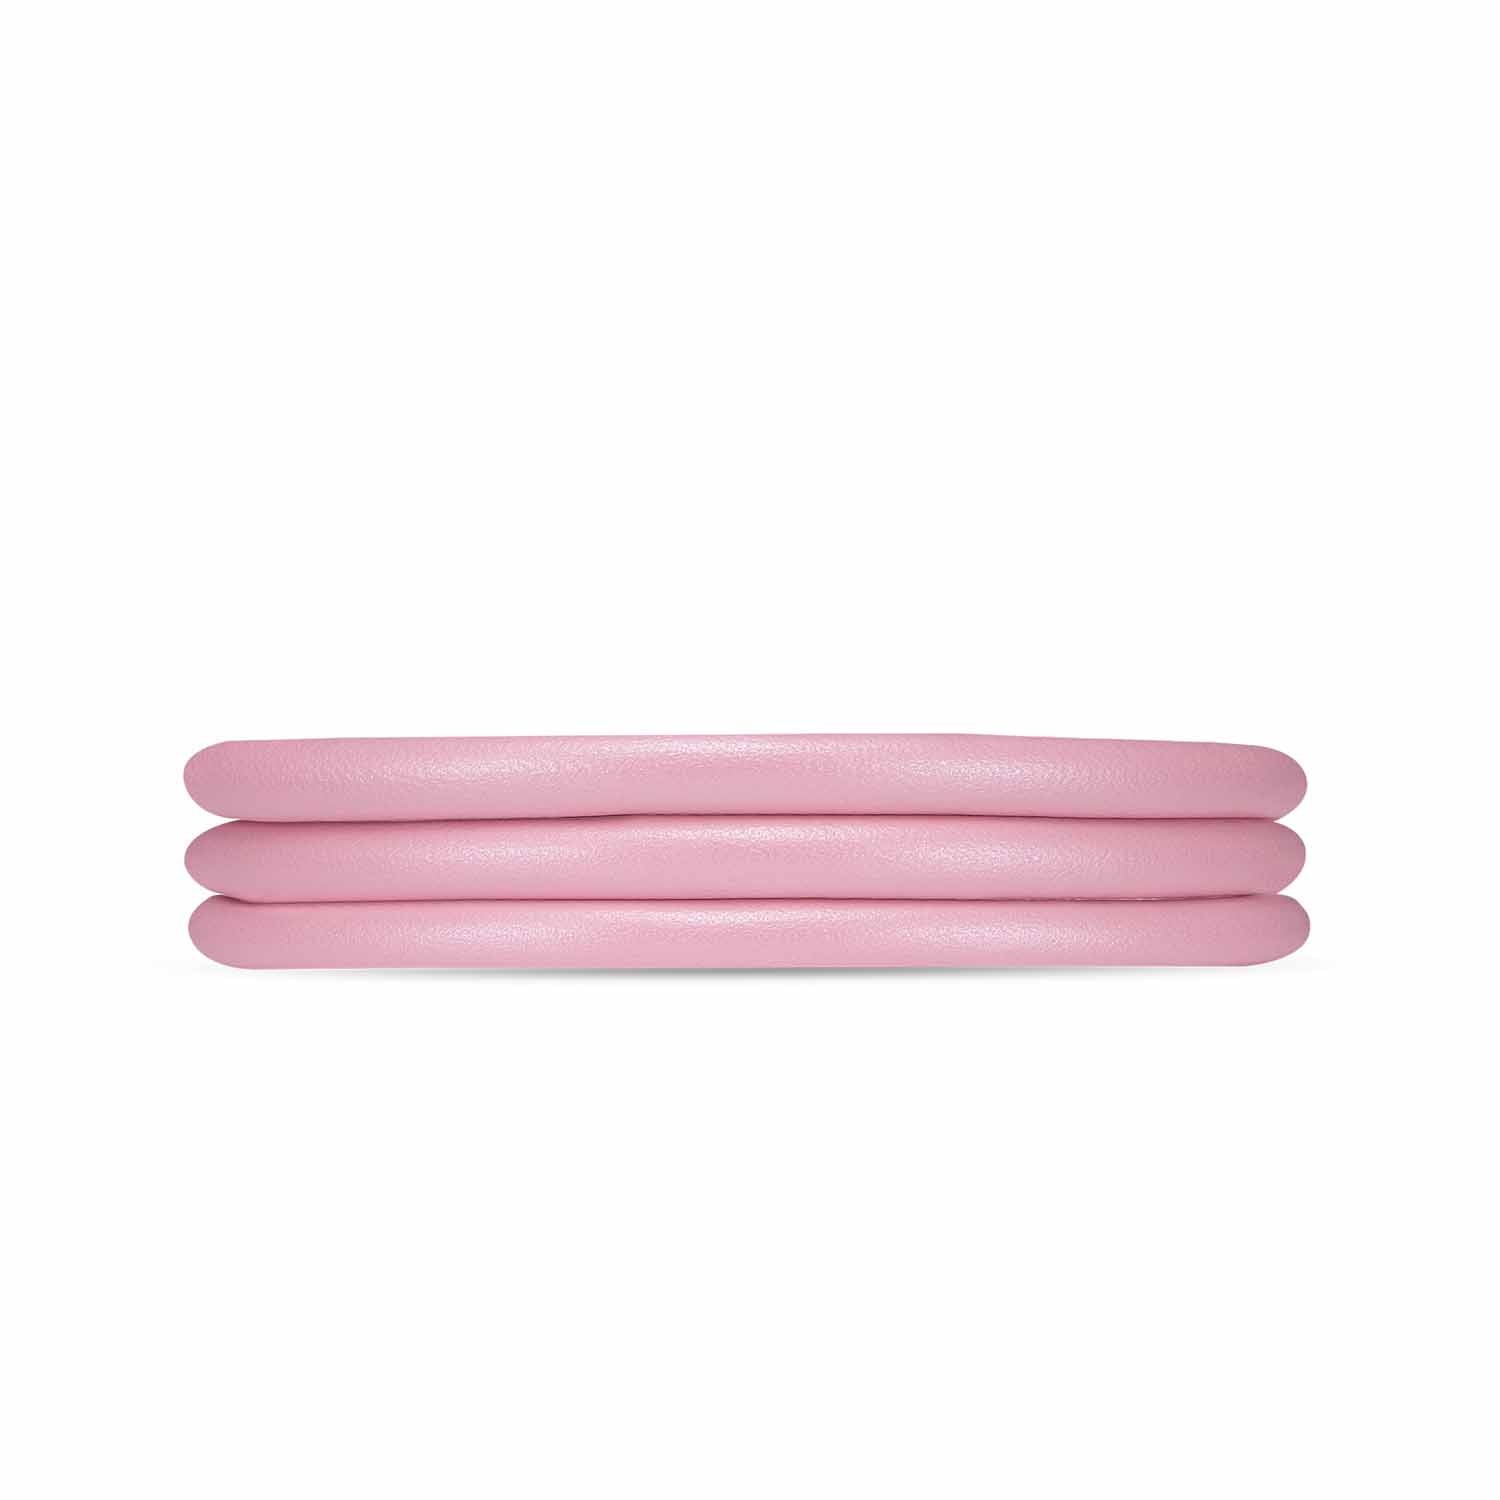 Billede af Christina Design London Jewelry & Watches - Pink læderarmbånd 4 mm